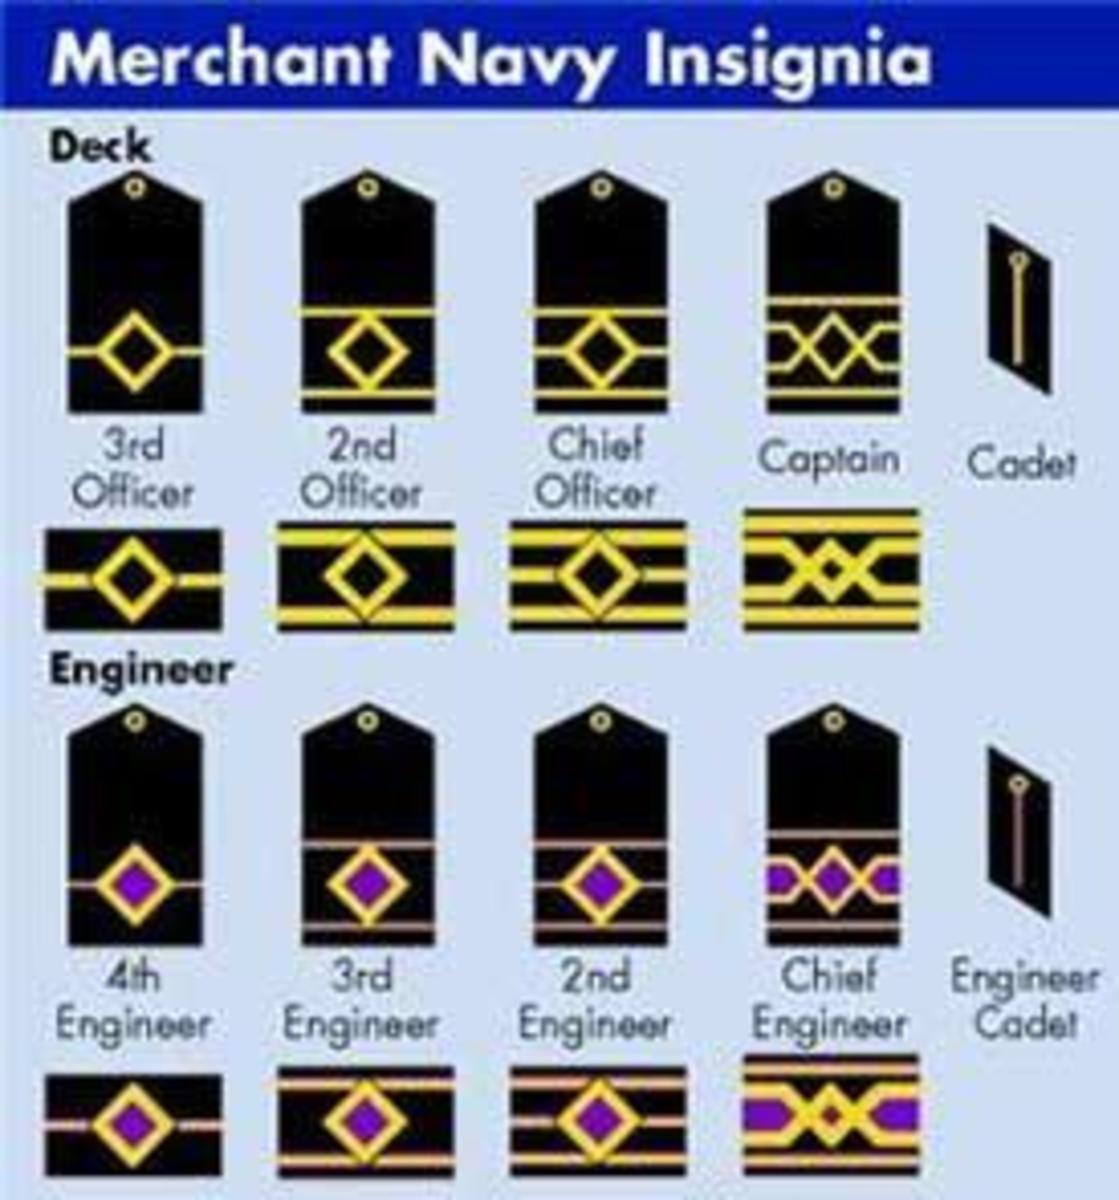 Marine Rank Chart